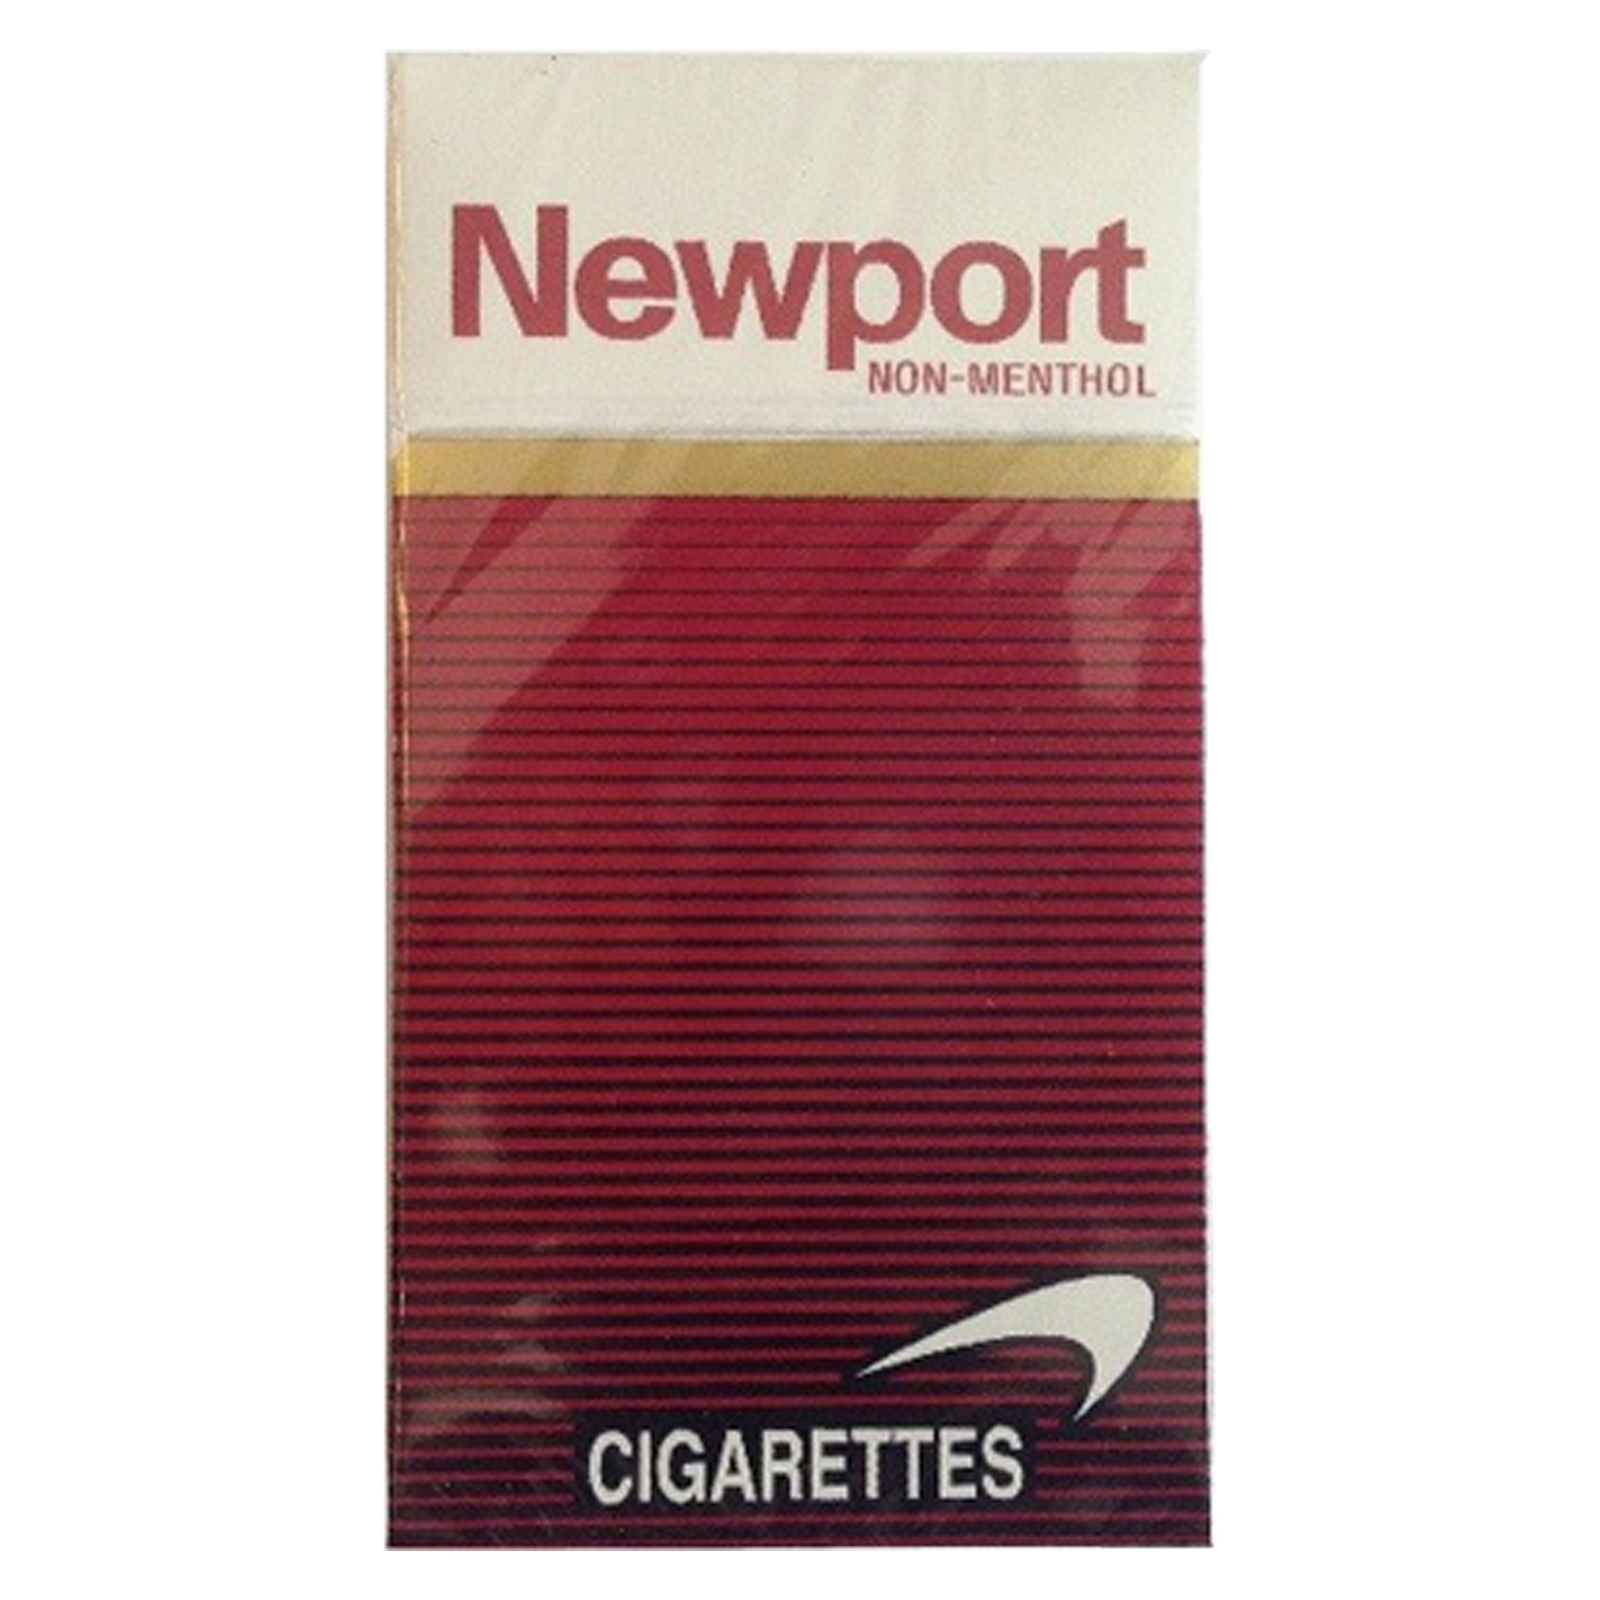 Newport Non Menthol 100s Cigarettes 20ct Box 1pk